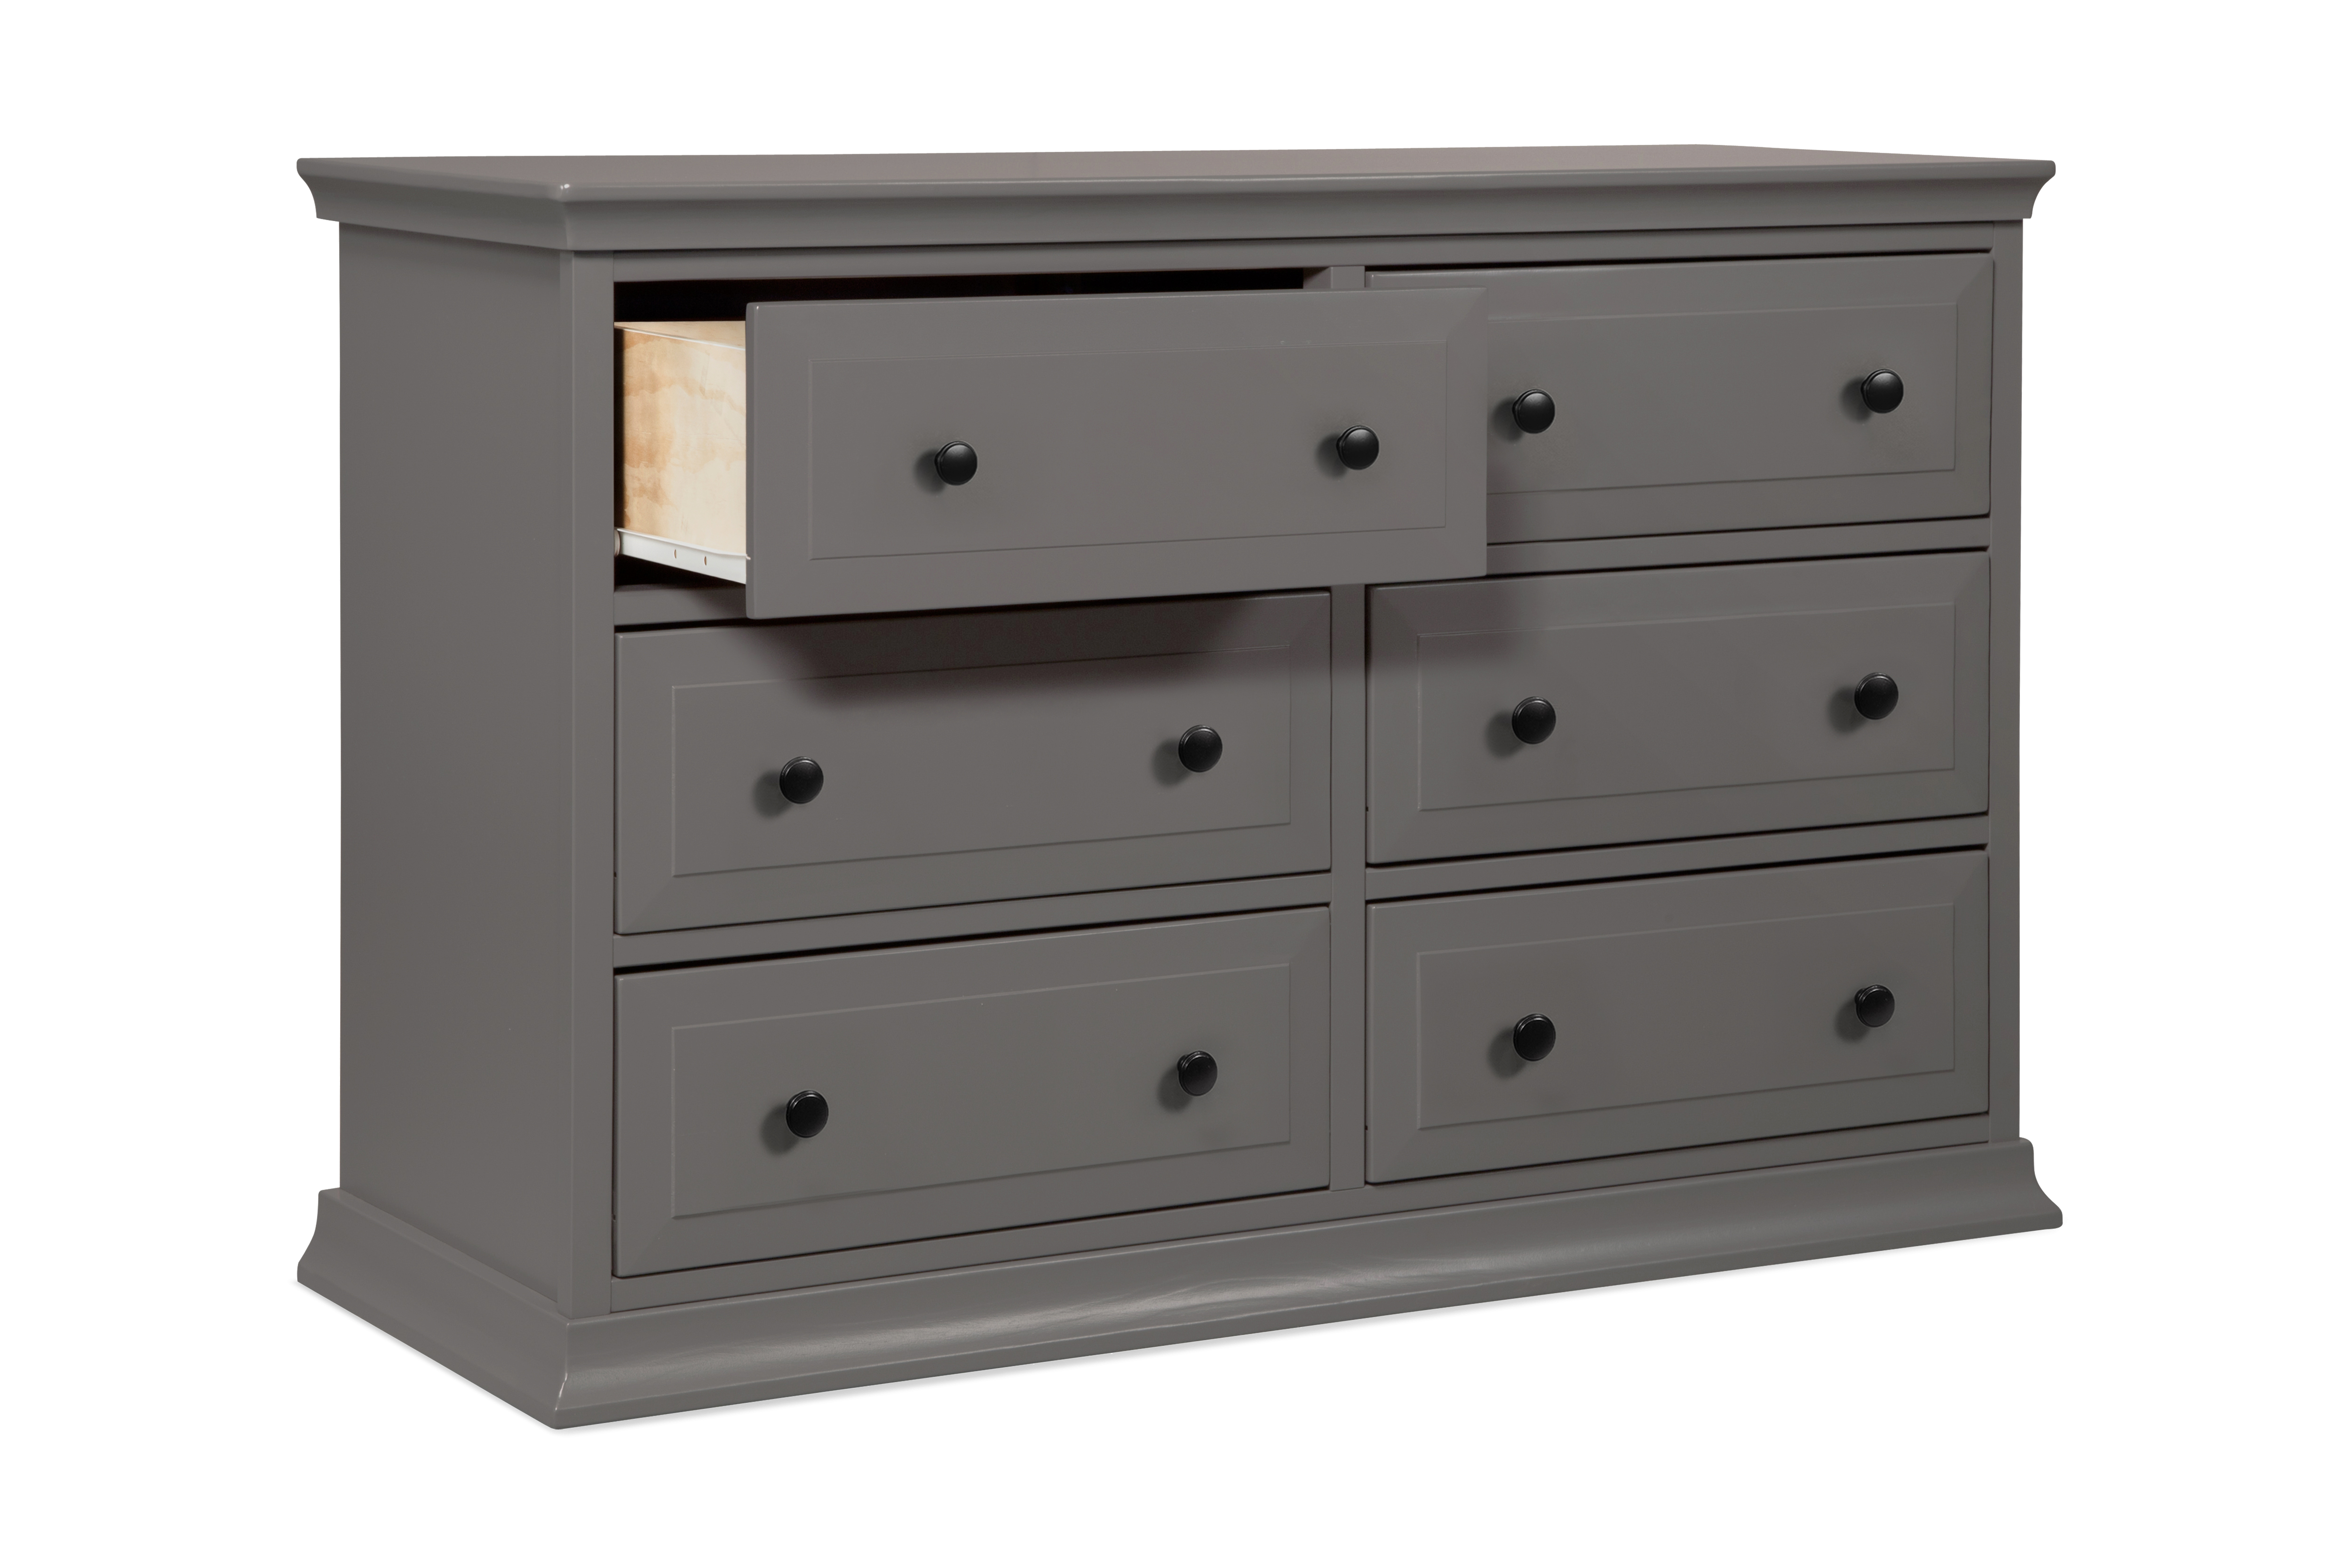 DaVinci Signature 6-Drawer Double Dresser in Slate - image 4 of 5